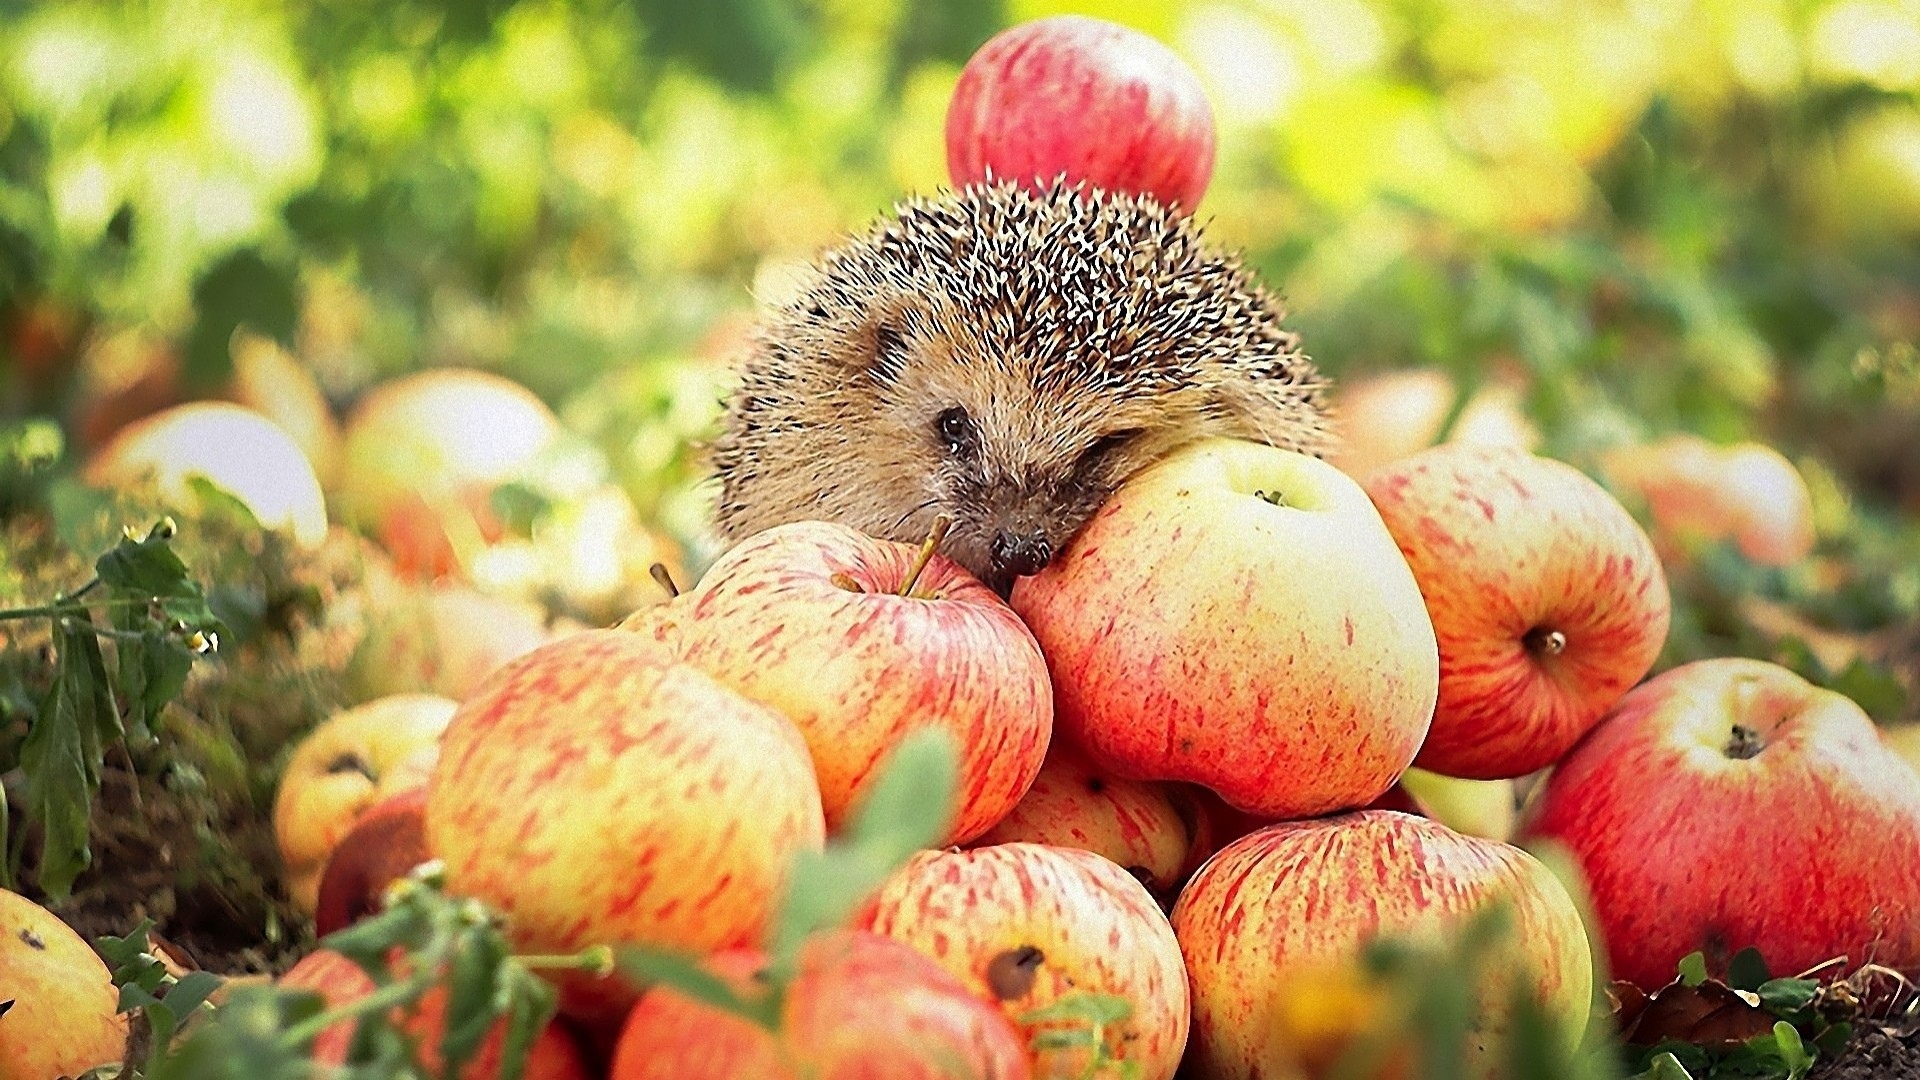 hedgehog, And, Apples Wallpaper